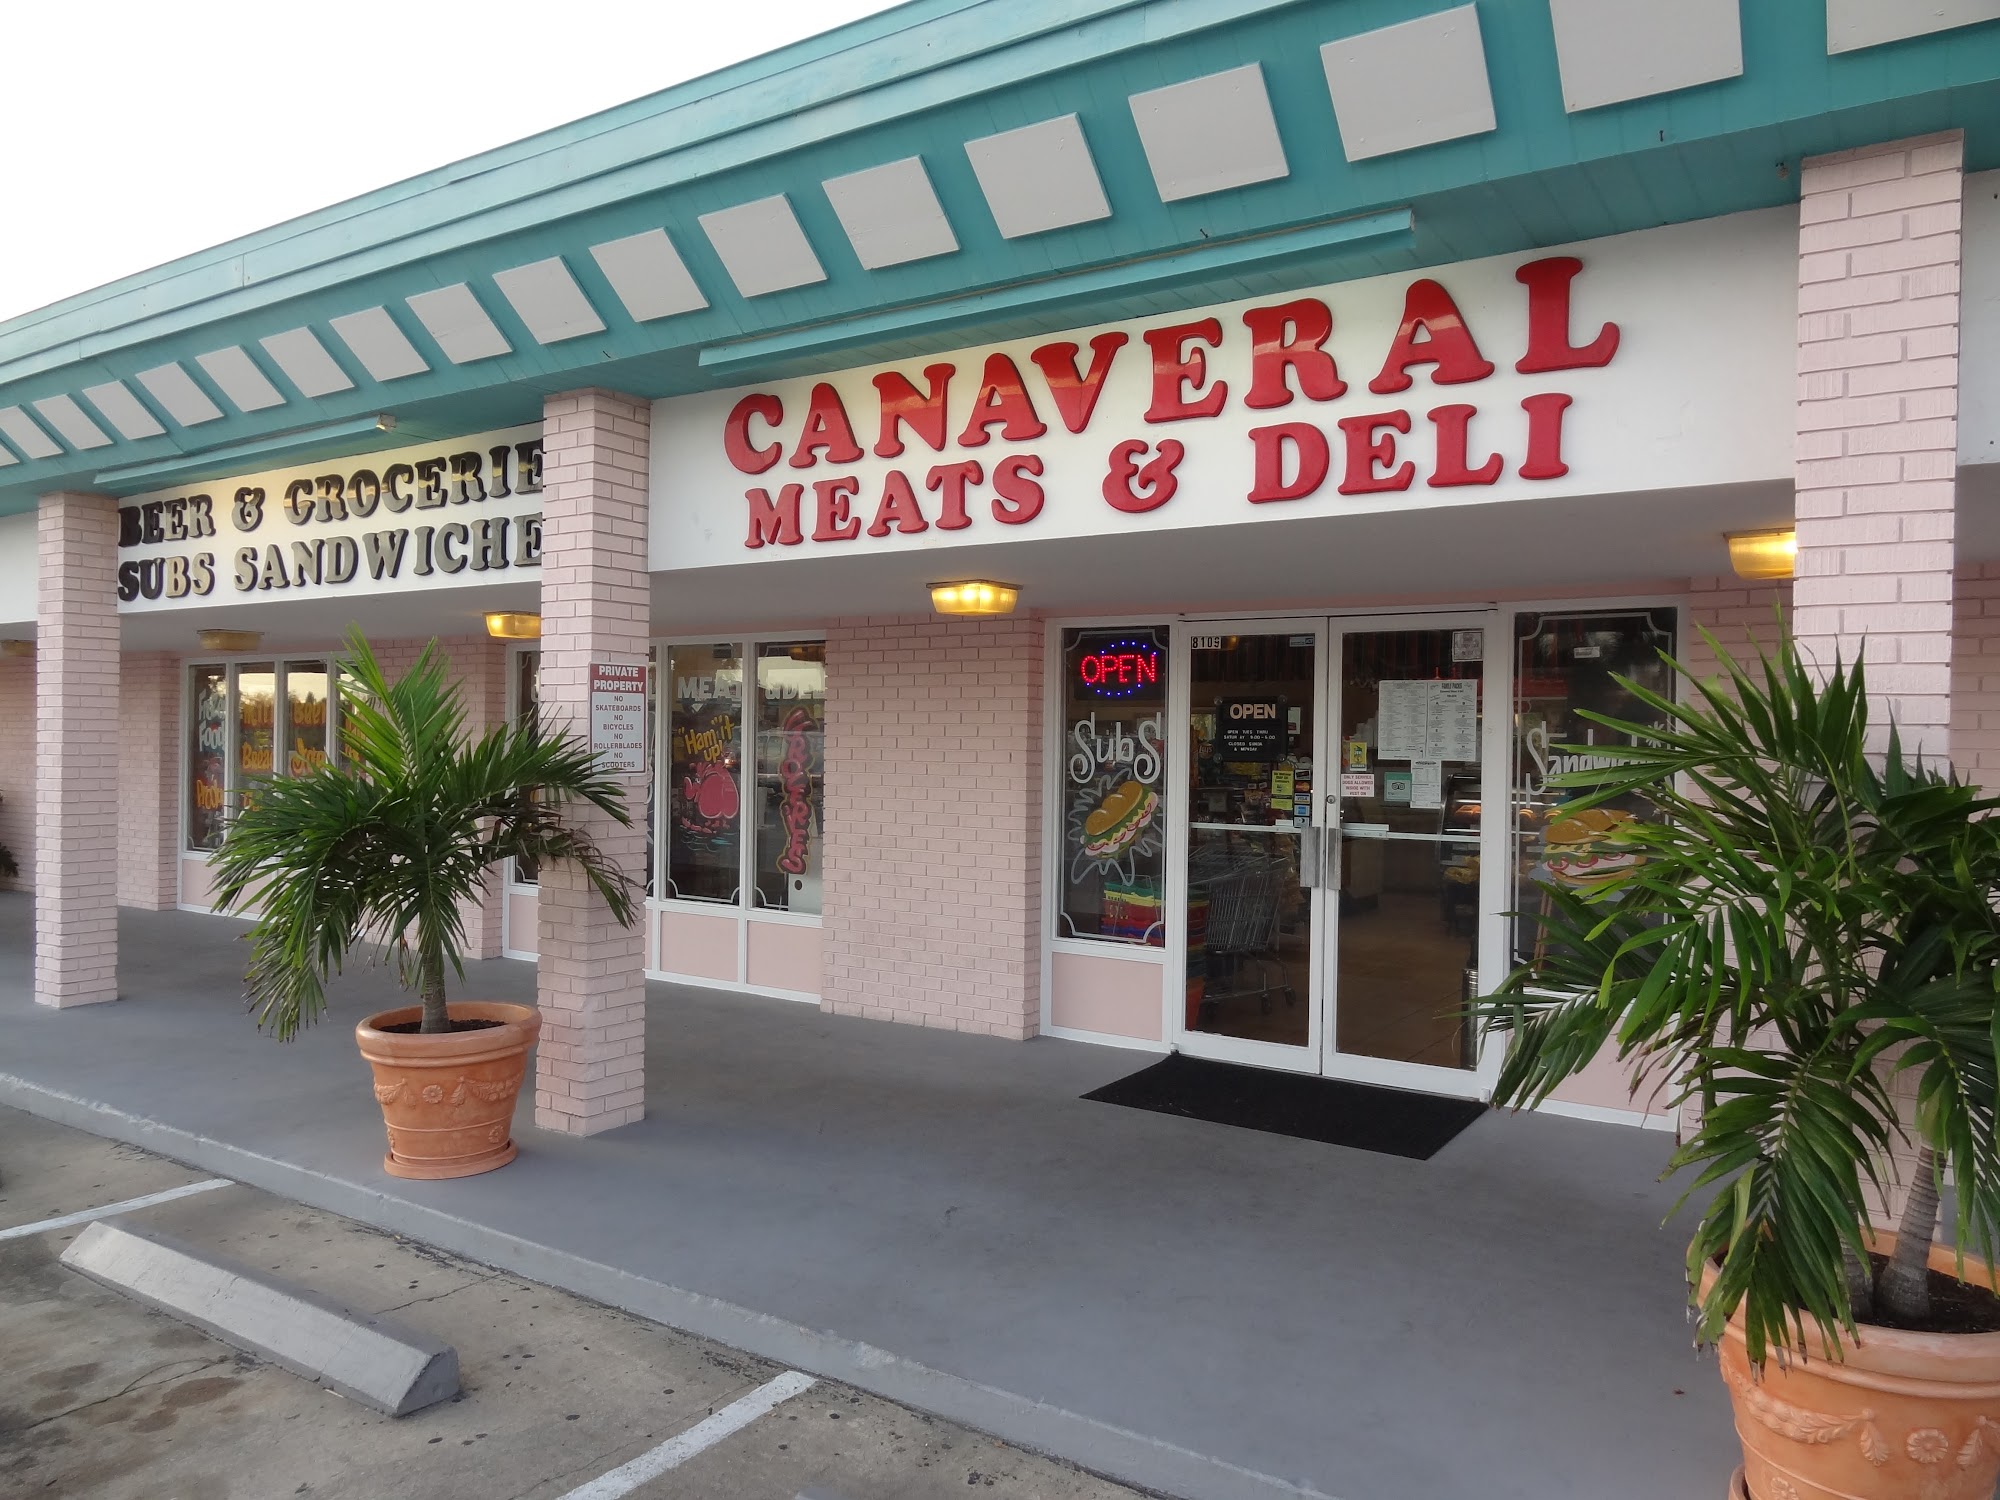 Canaveral Meats & Deli